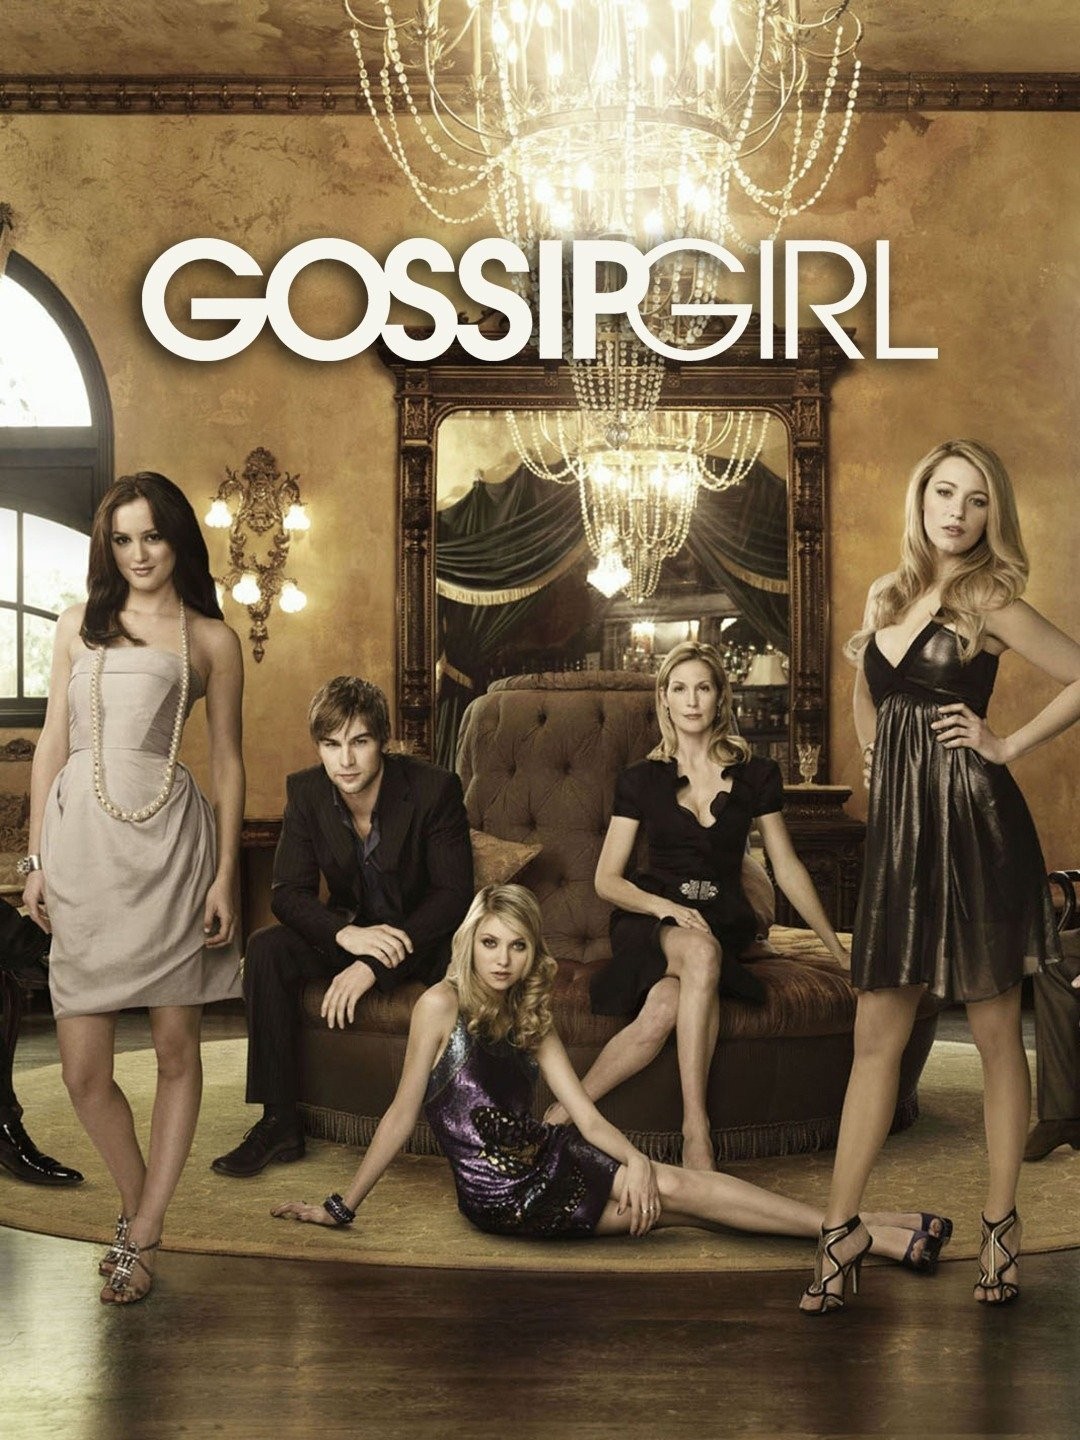 Gossip Girl: Season 6